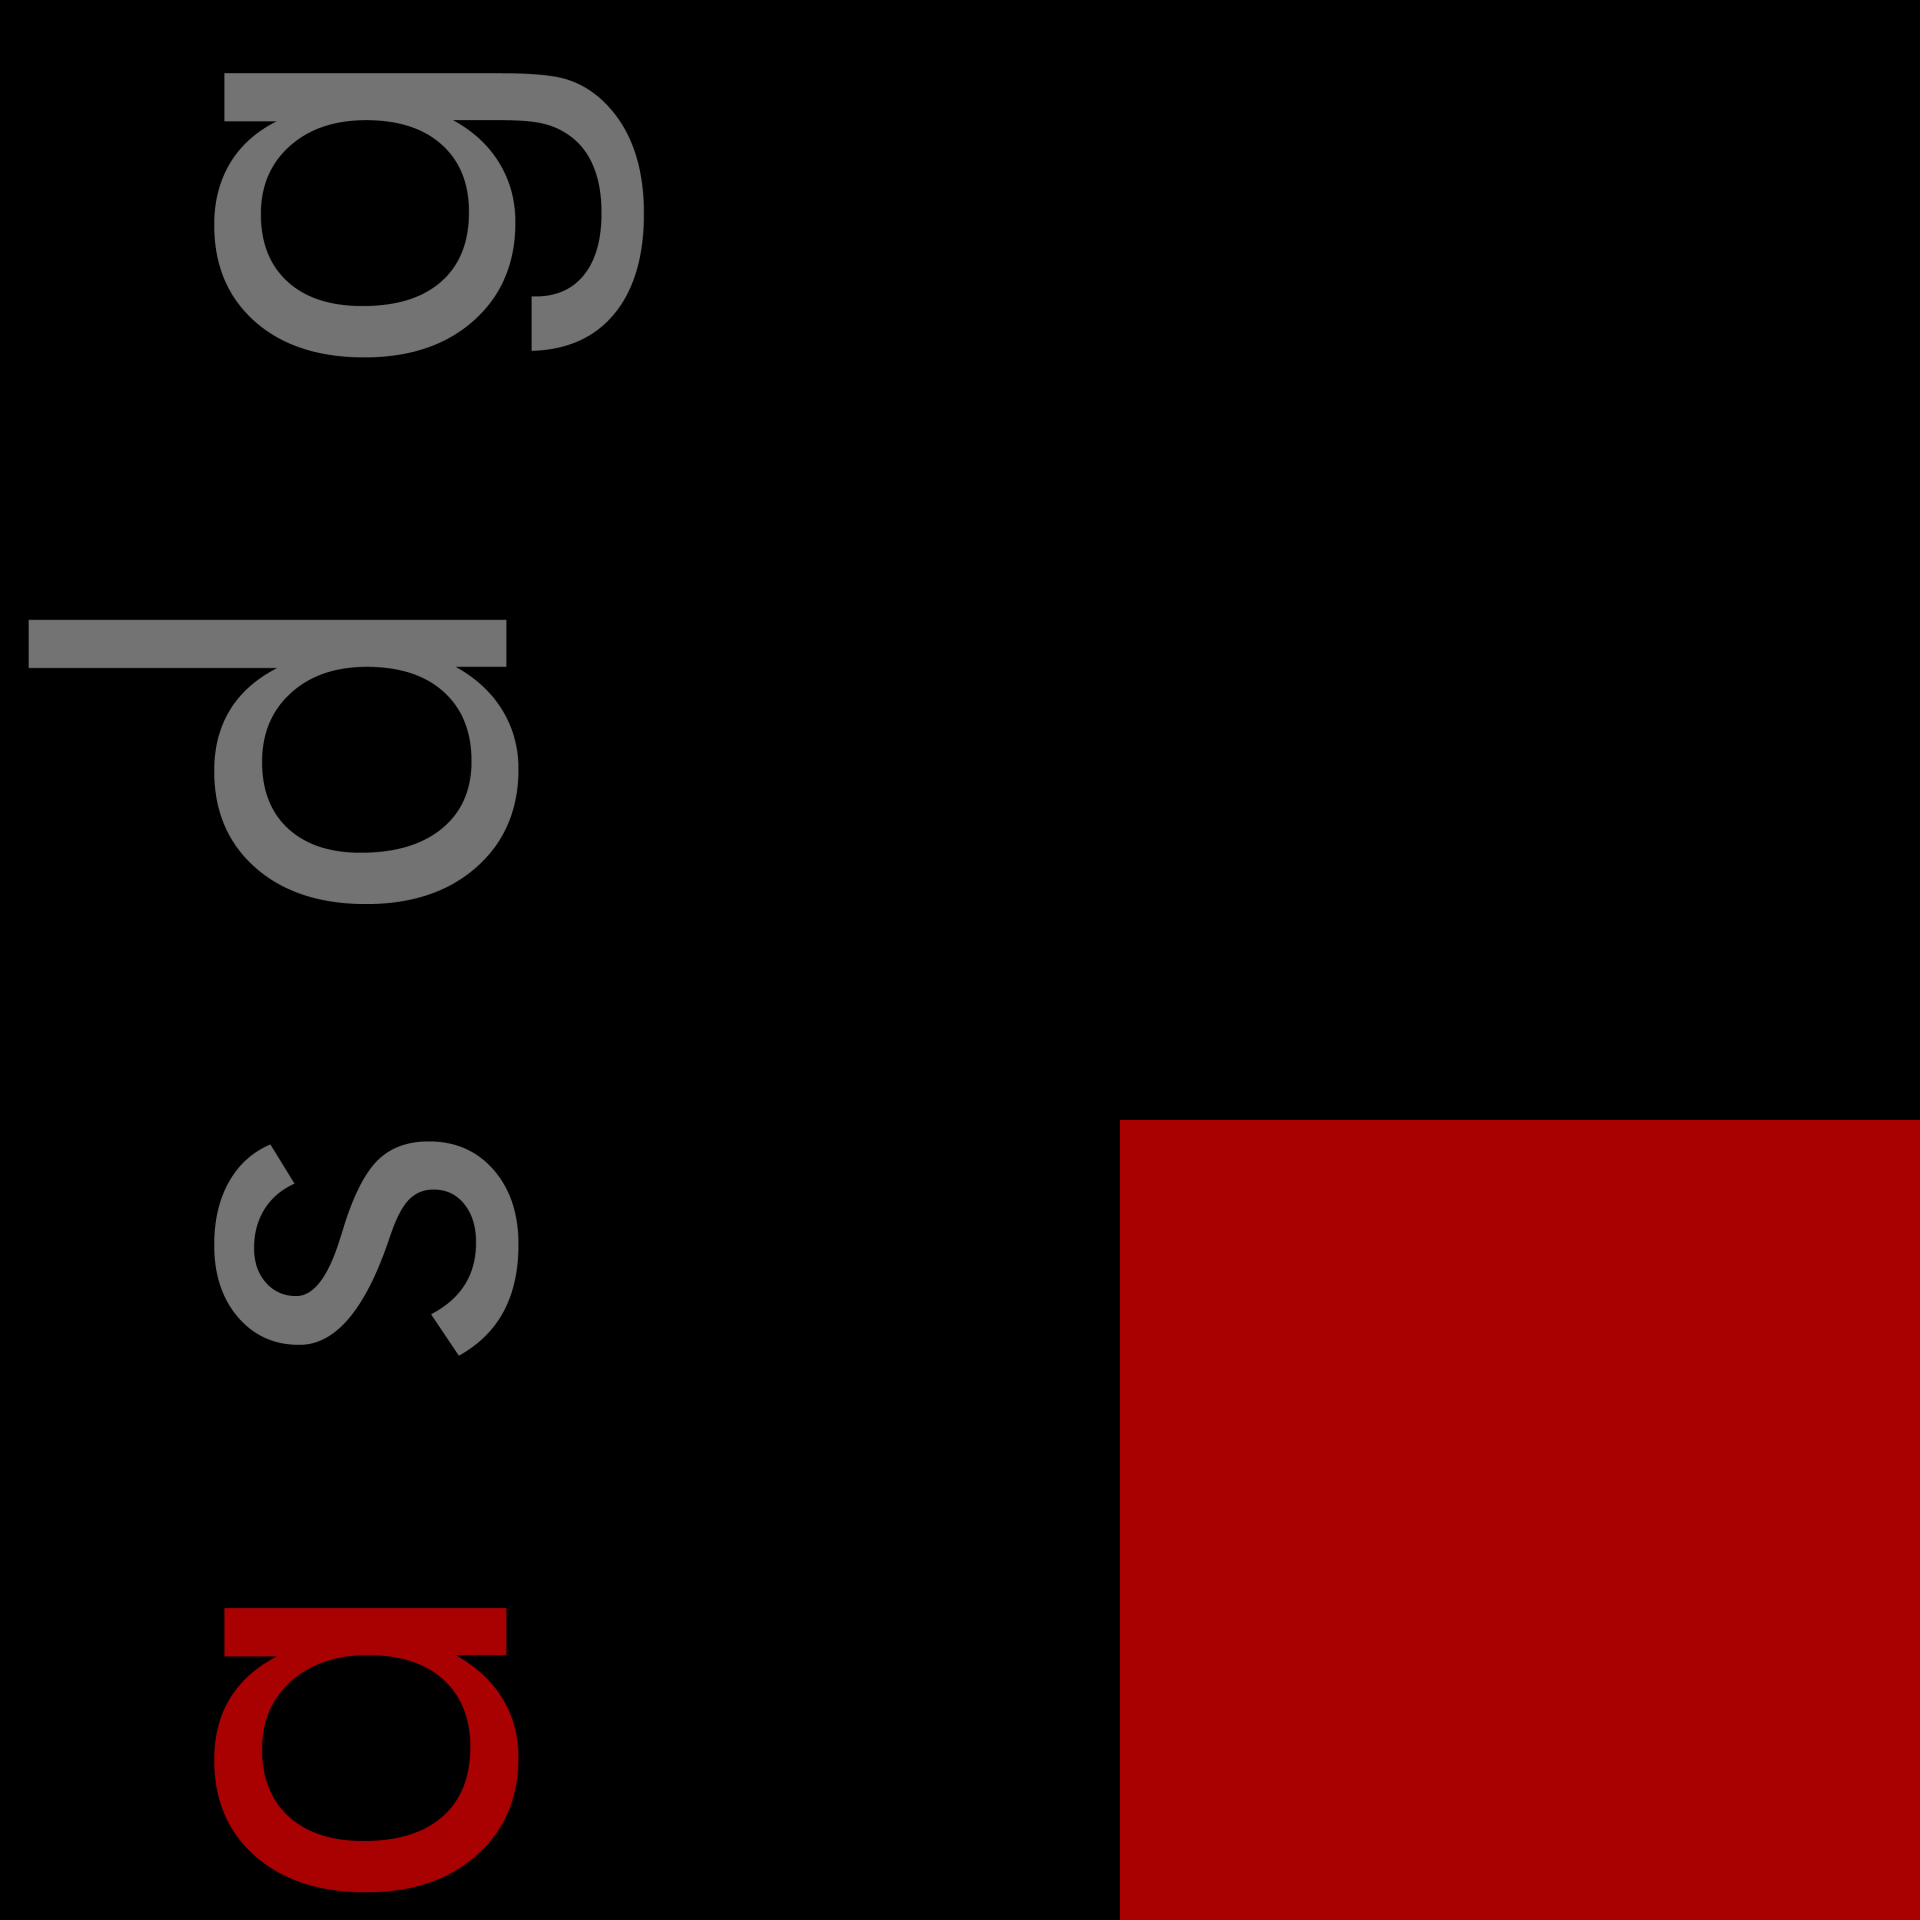 alpha studio design group logo